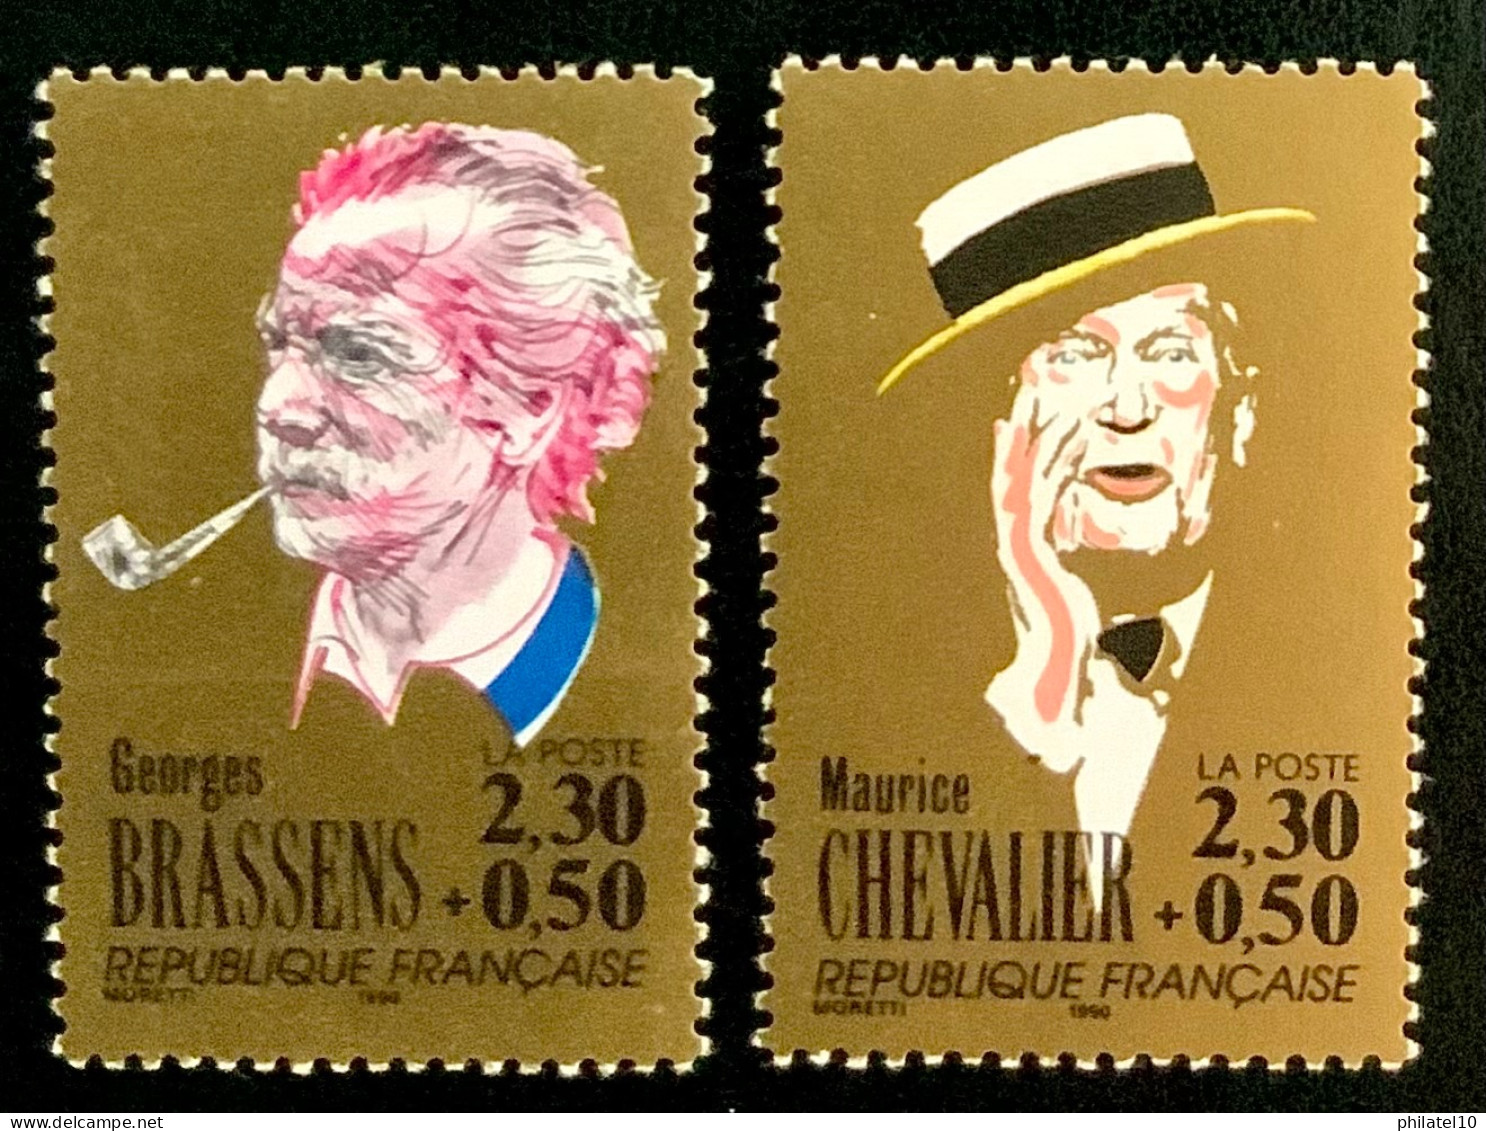 1990 FRANCE N 2650 / 2654 - MAURICE CHEVALIER ET GEORGES BRASSENS - NEUF** - Unused Stamps